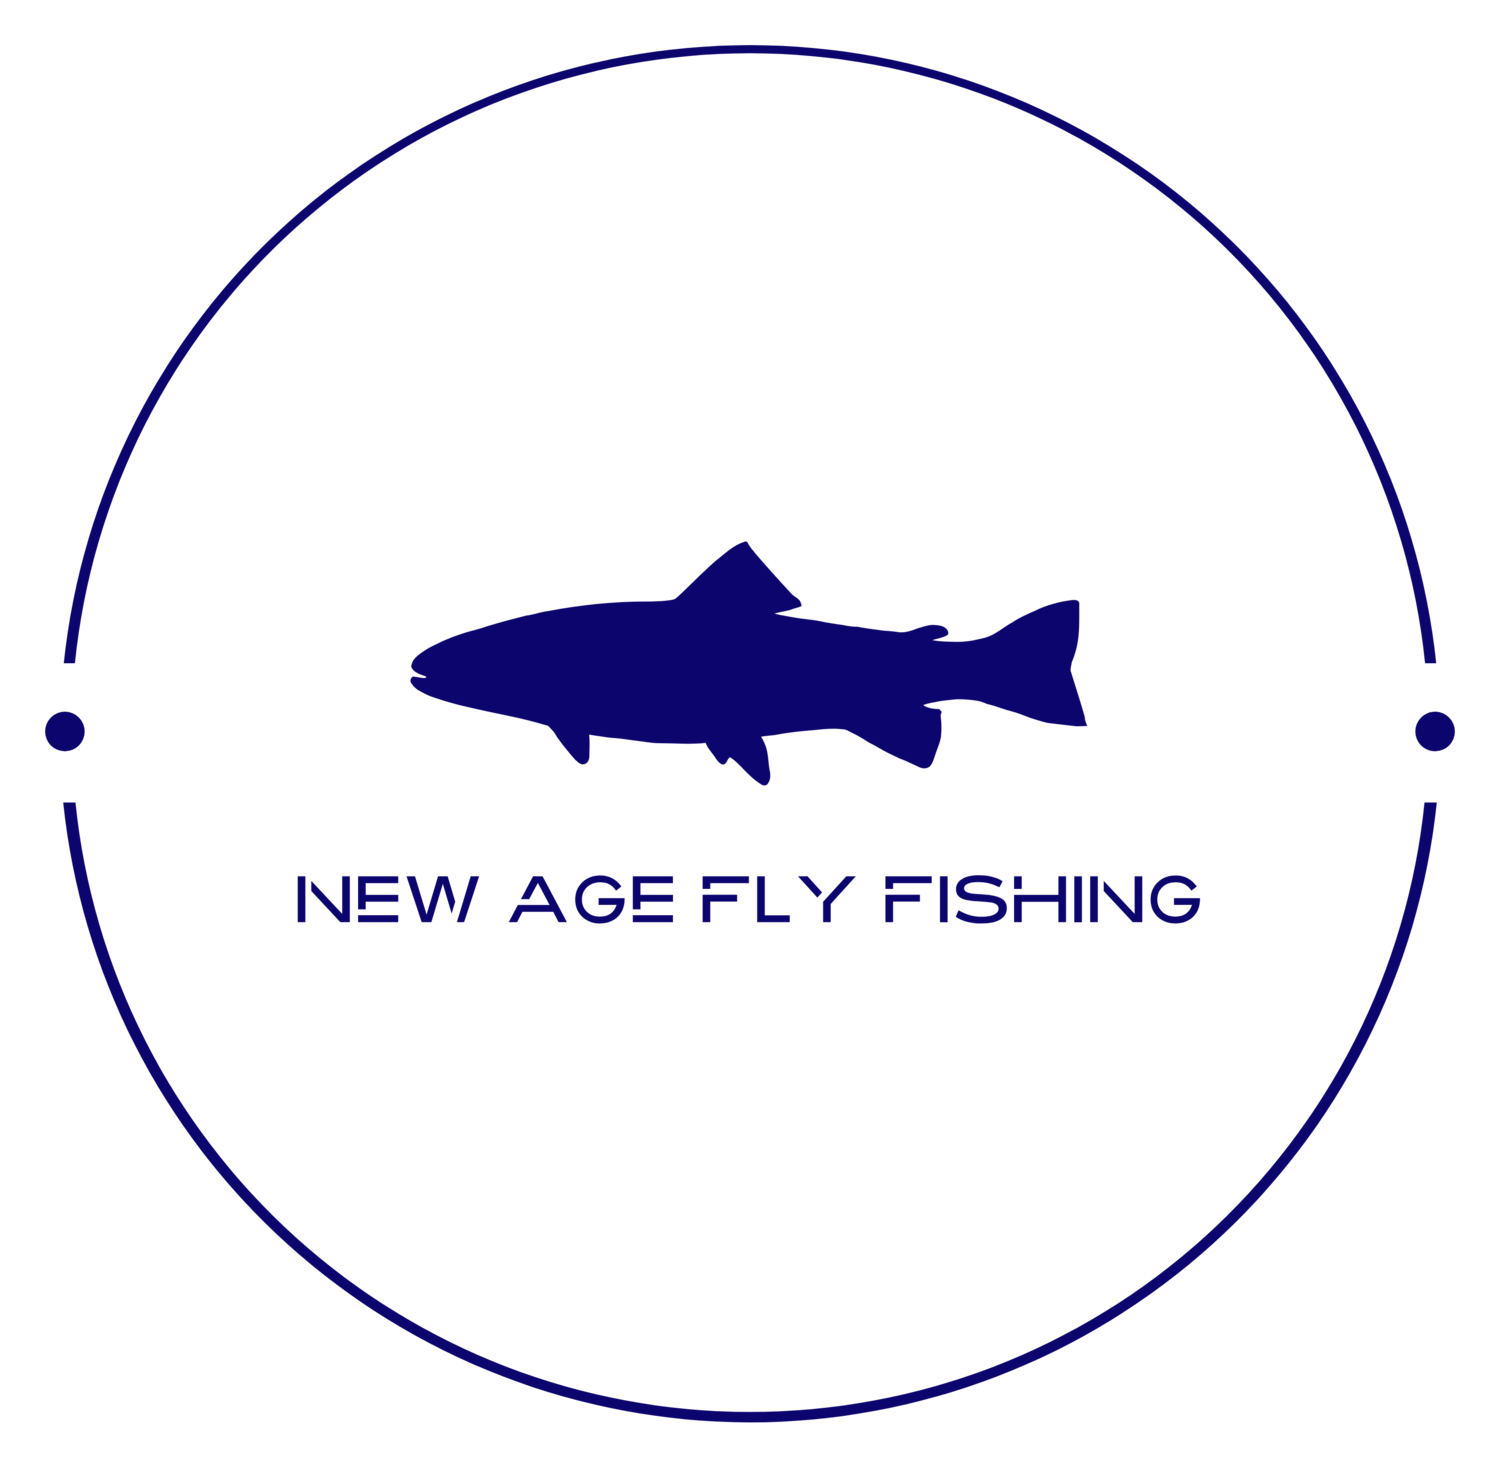 https://images.squarespace-cdn.com/content/v1/5d1647ab299b0600011b15d5/21bff13f-9b68-4af0-bada-6d96757f640e/New+Age+Fly+Fishing+logo+2020.png?format=1500w